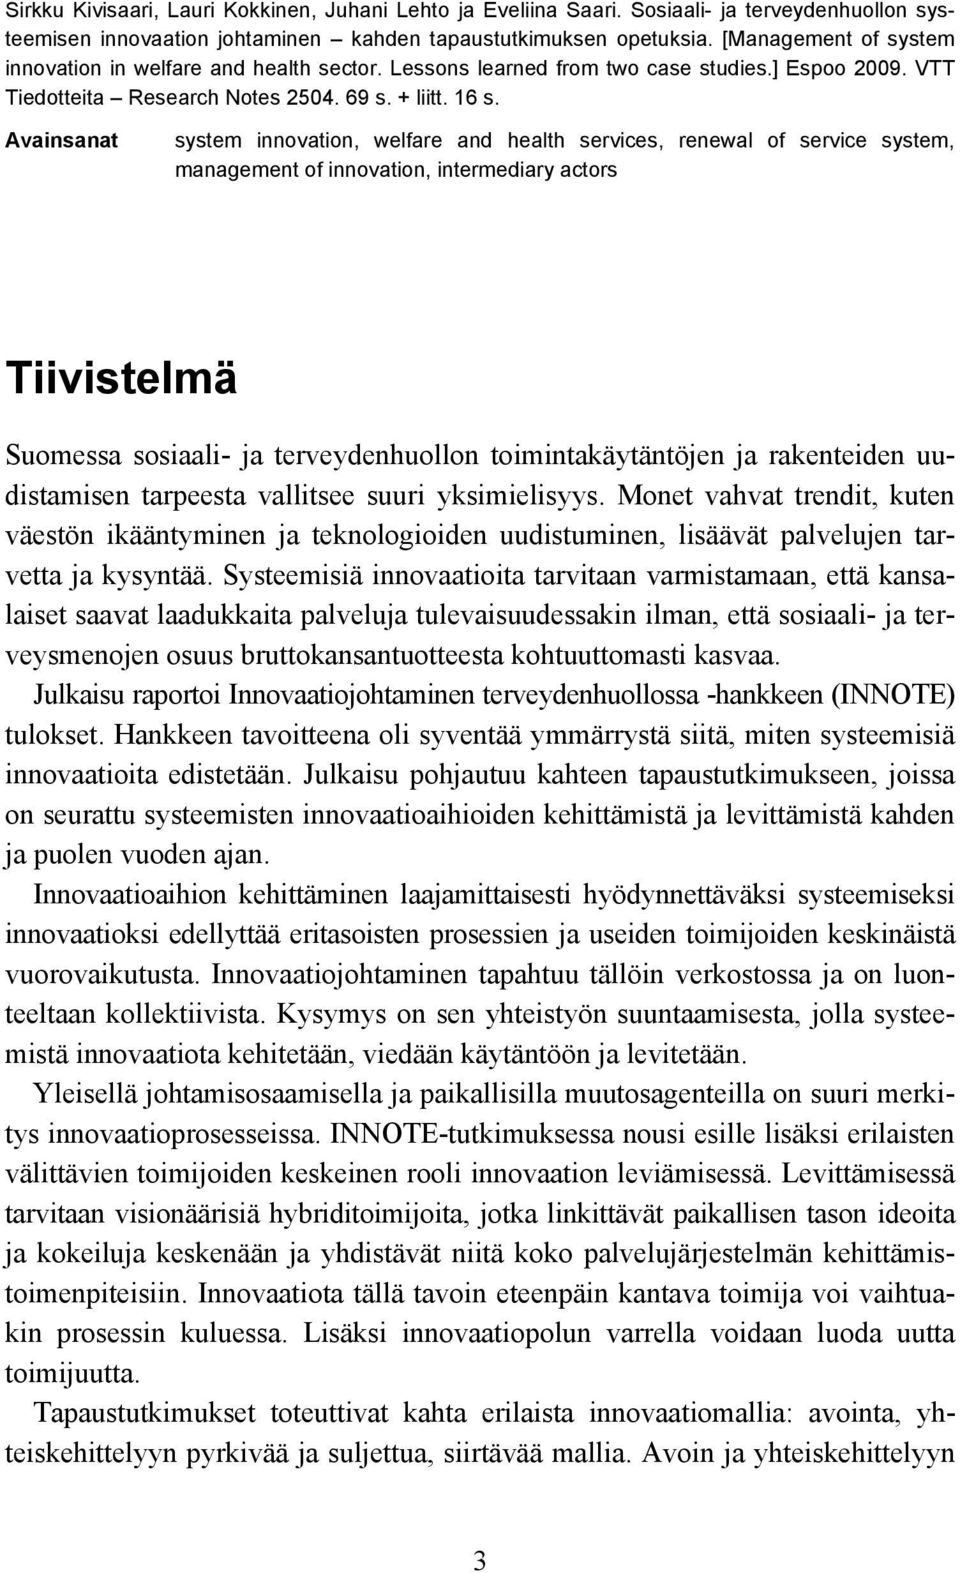 Avainsanat system innovation, welfare and health services, renewal of service system, management of innovation, intermediary actors Tiivistelmä Suomessa sosiaali- ja terveydenhuollon